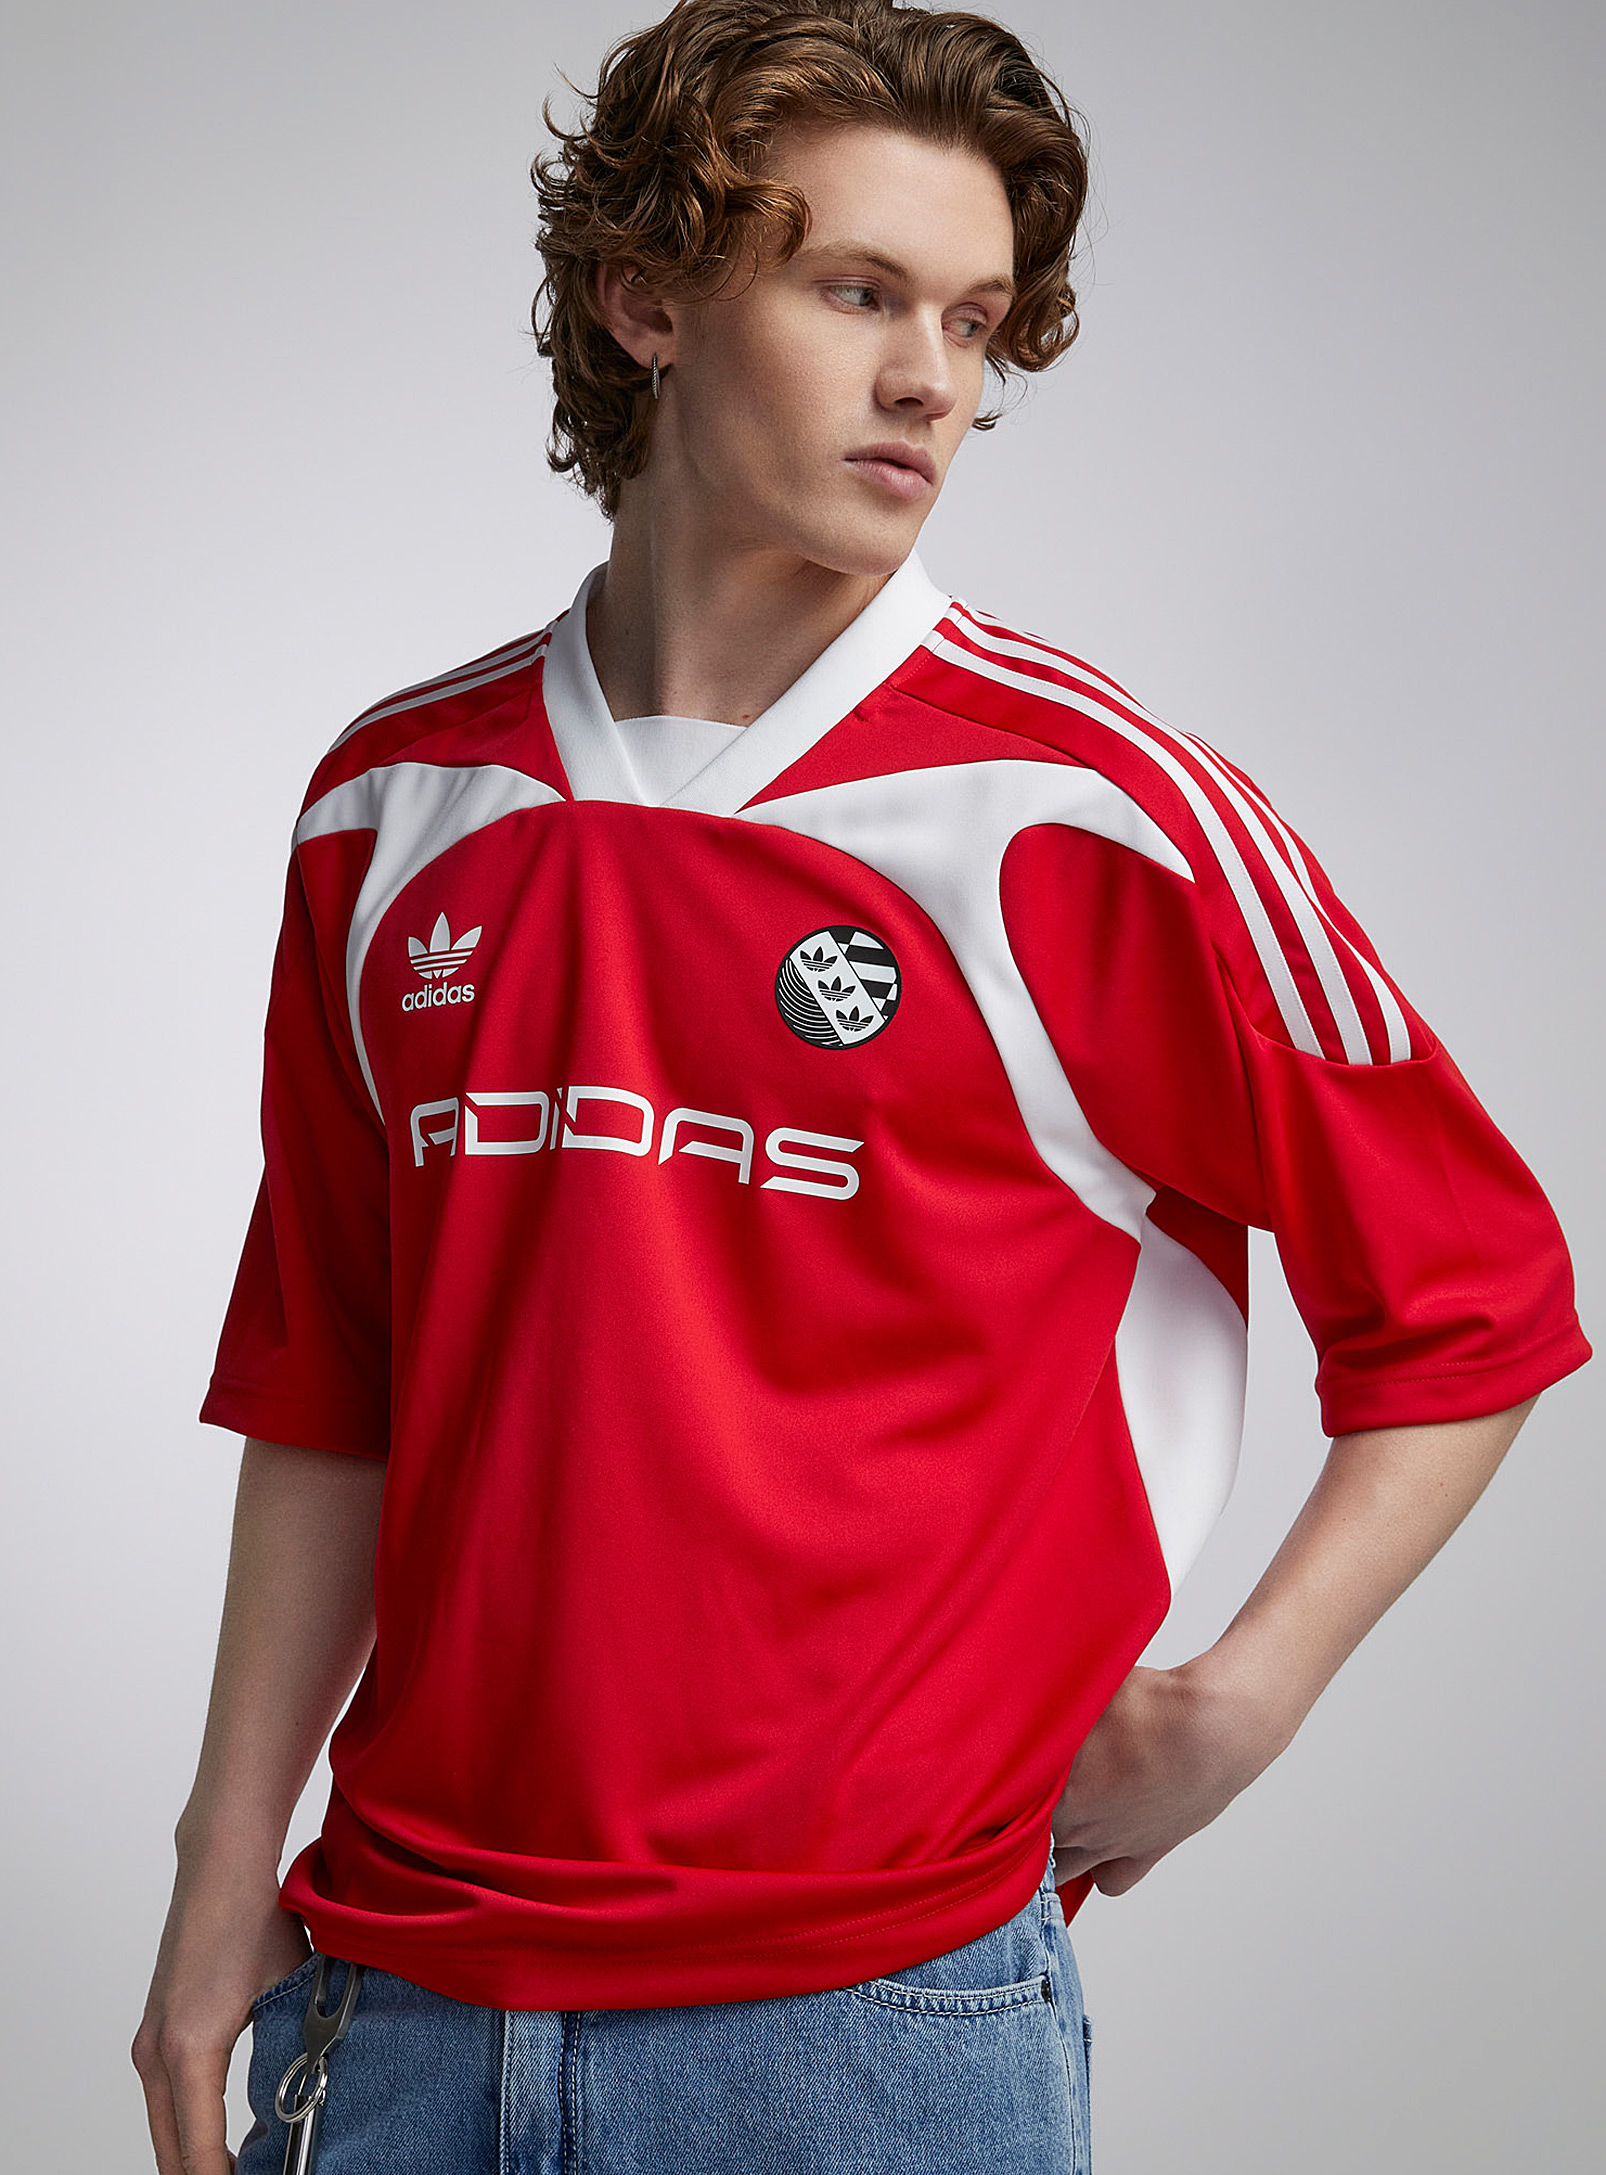 Adidas - Le jersey de soccer Adilenium